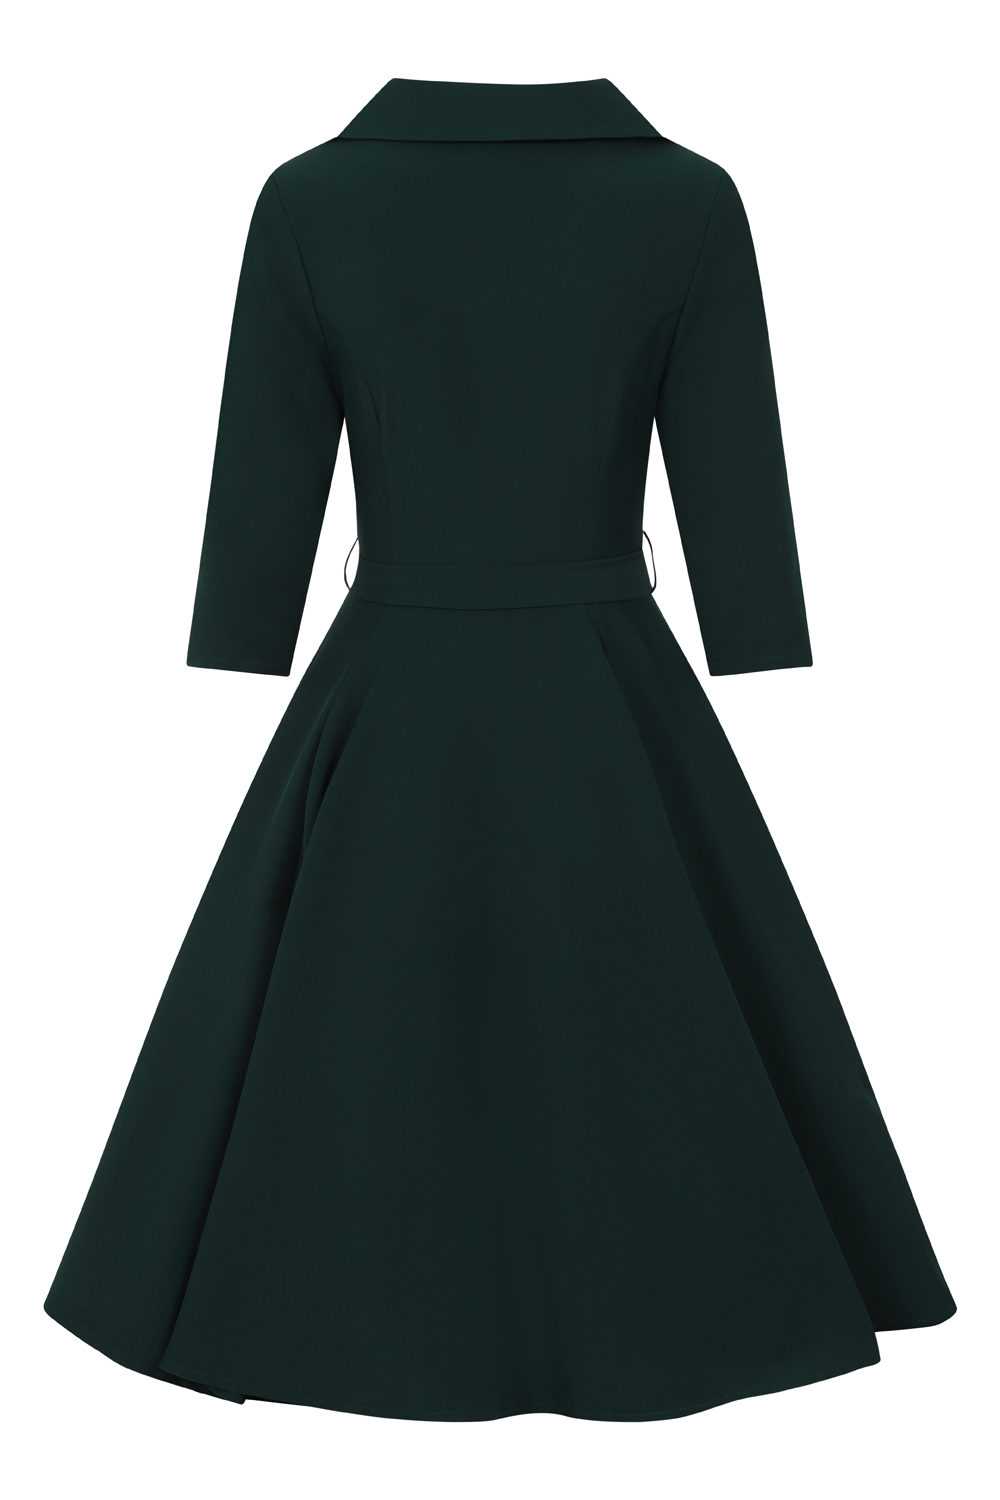 Gabriella Swing Dress in Emerald Green in Plus Size